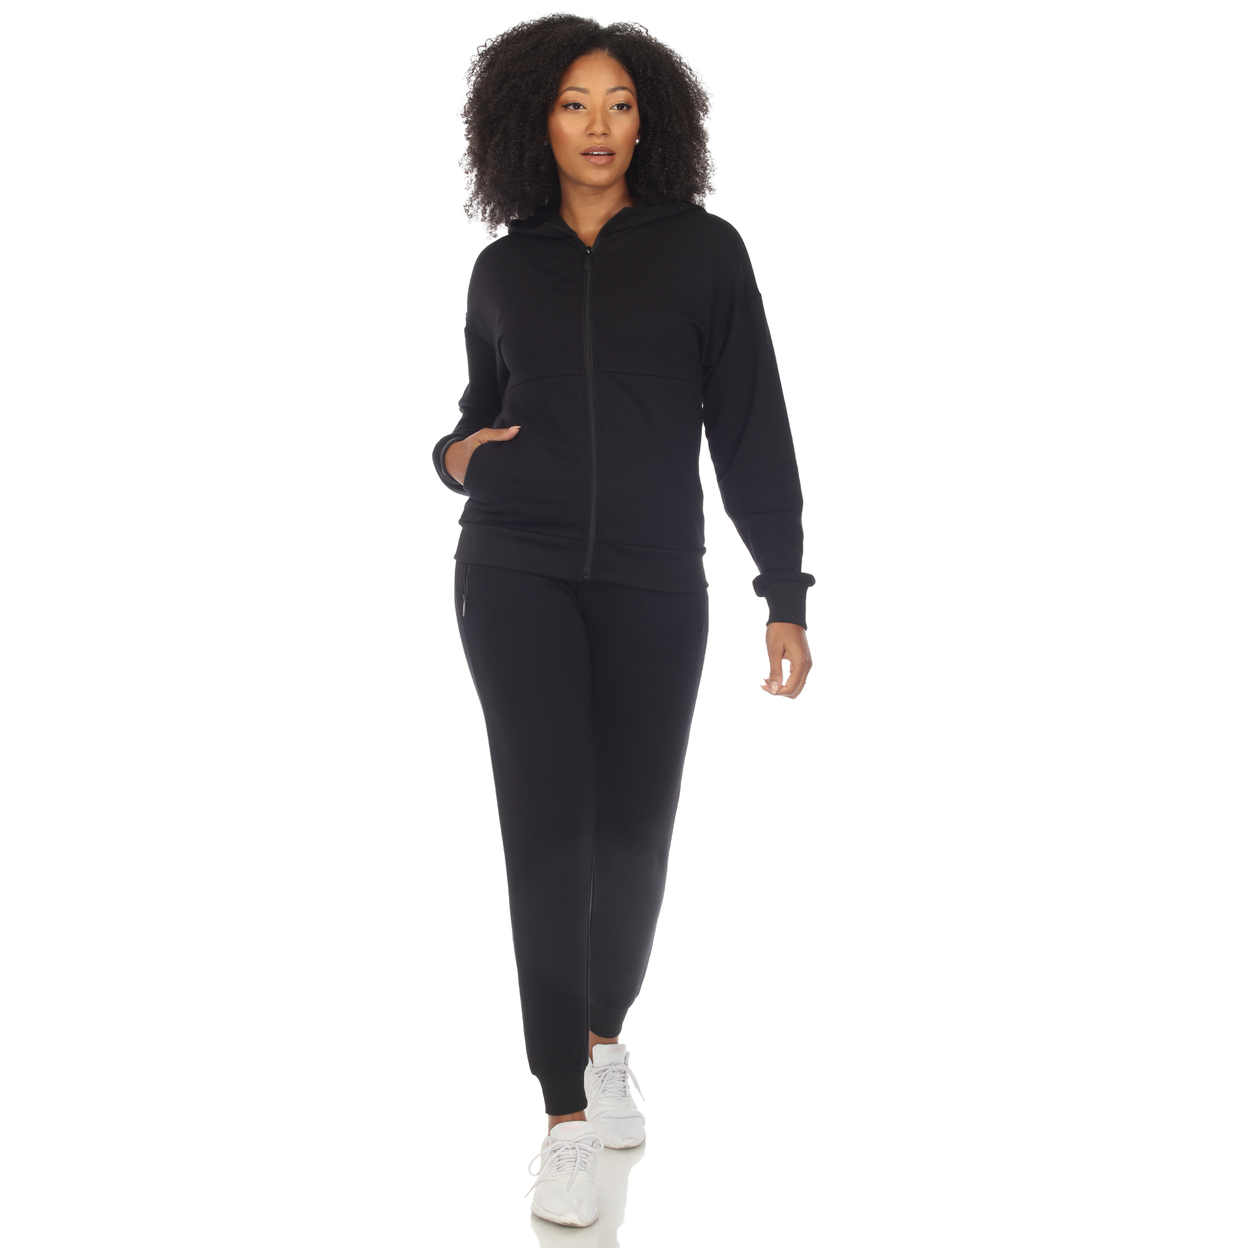 White Mark Women's 2-PC Fleece Sweatsuit Set - Black, Large